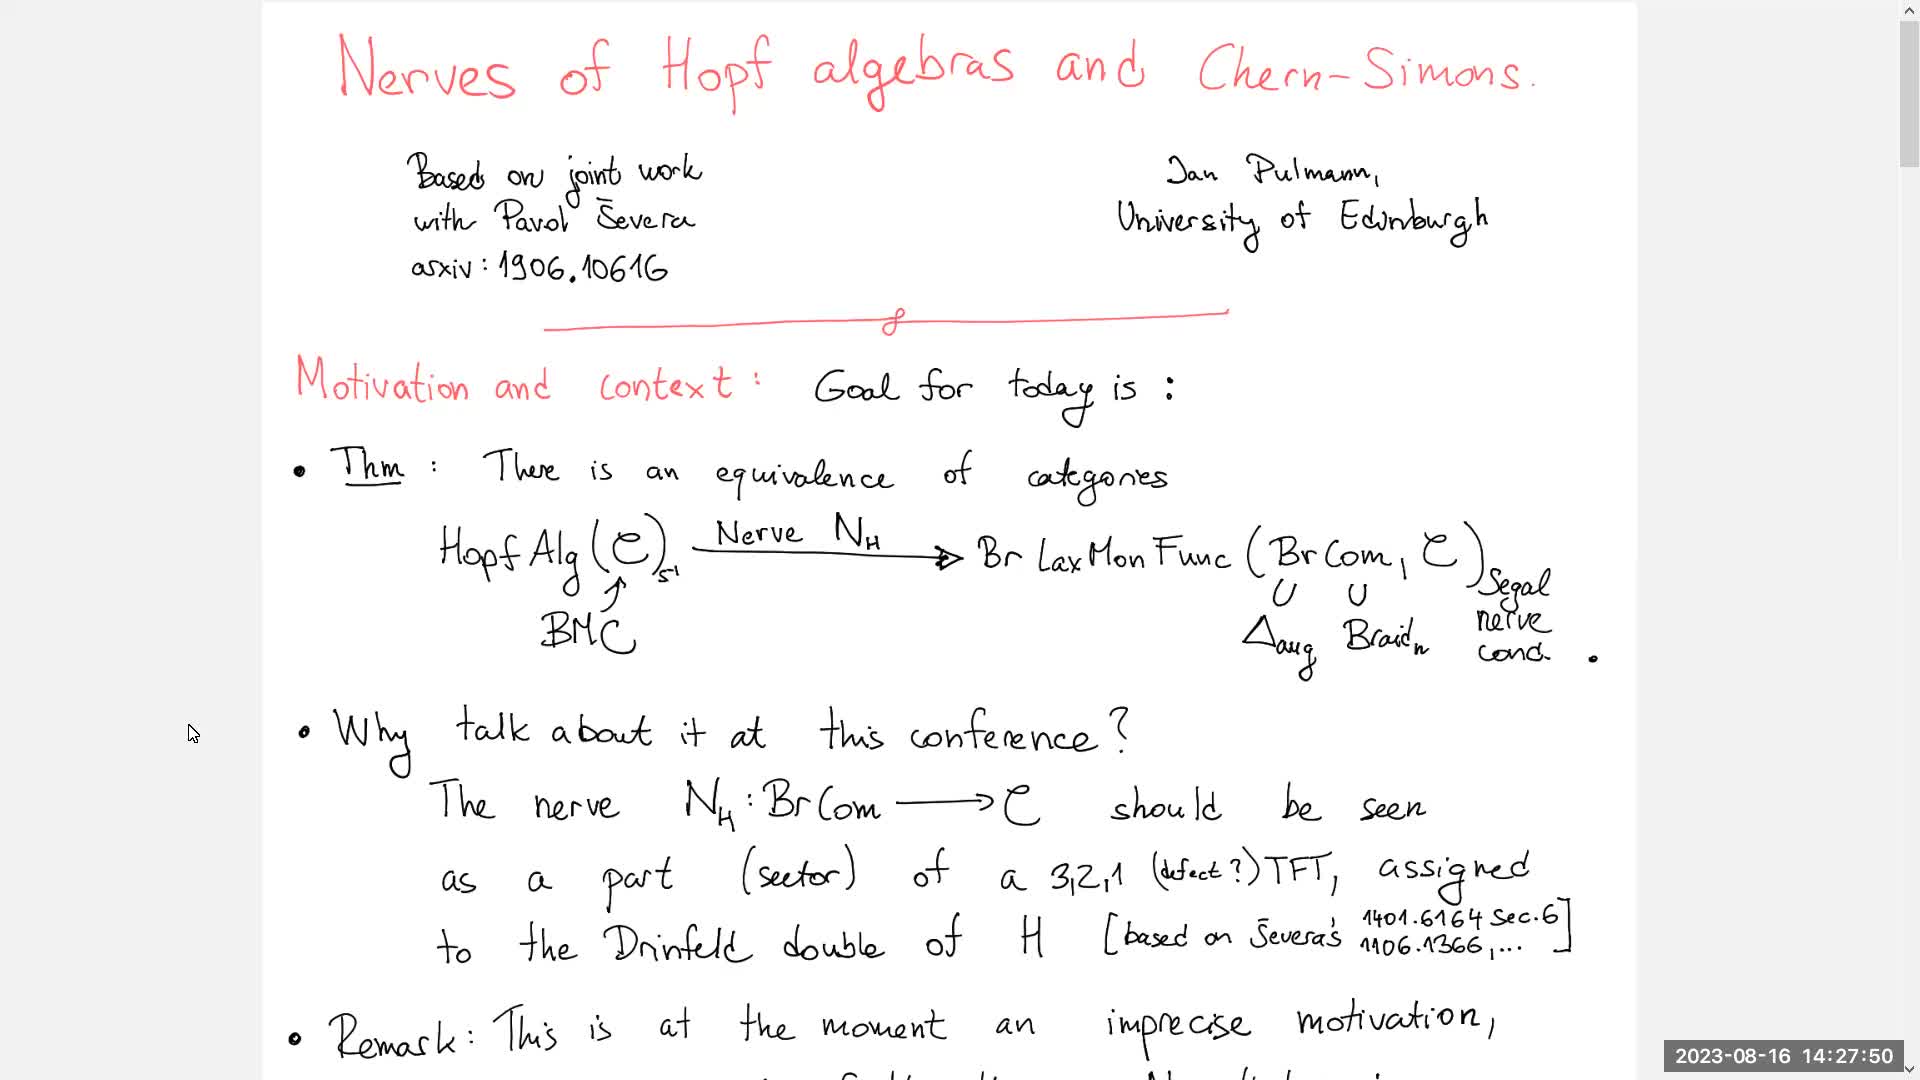 Jan Pulmann: Nerves of Hopf algebras and Chern-Simons theory